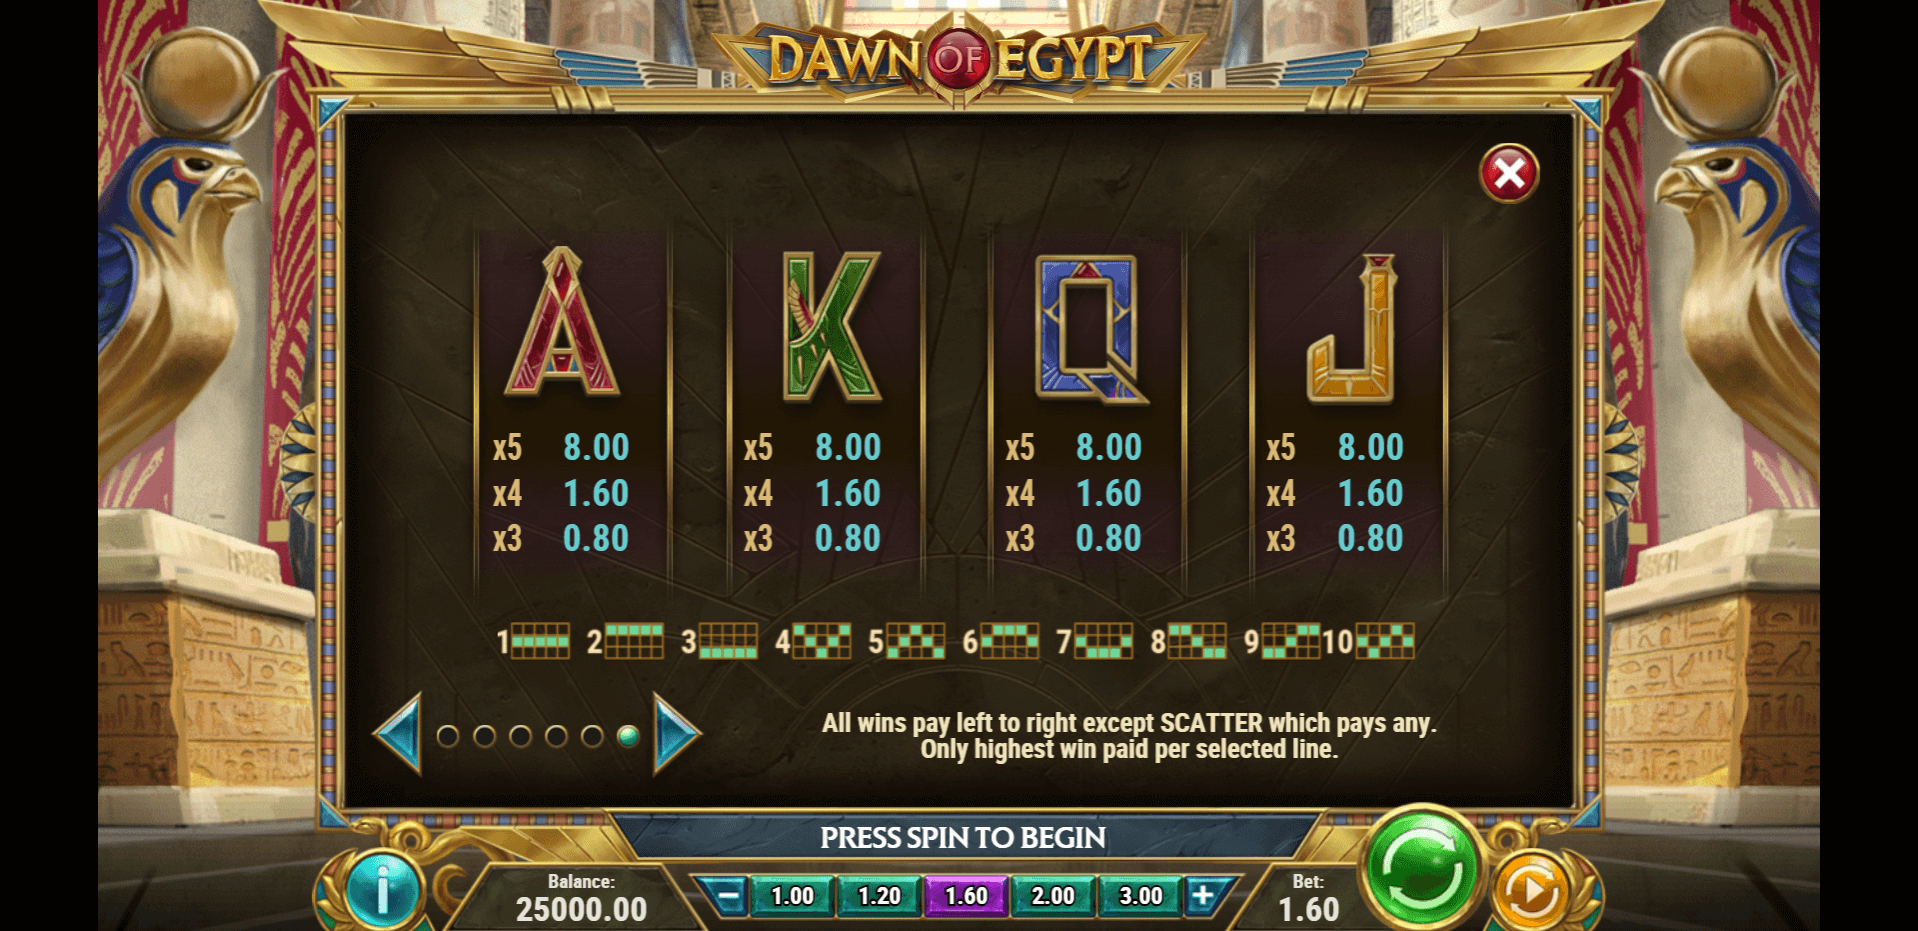 dawn of egypt slot machine detail image 5